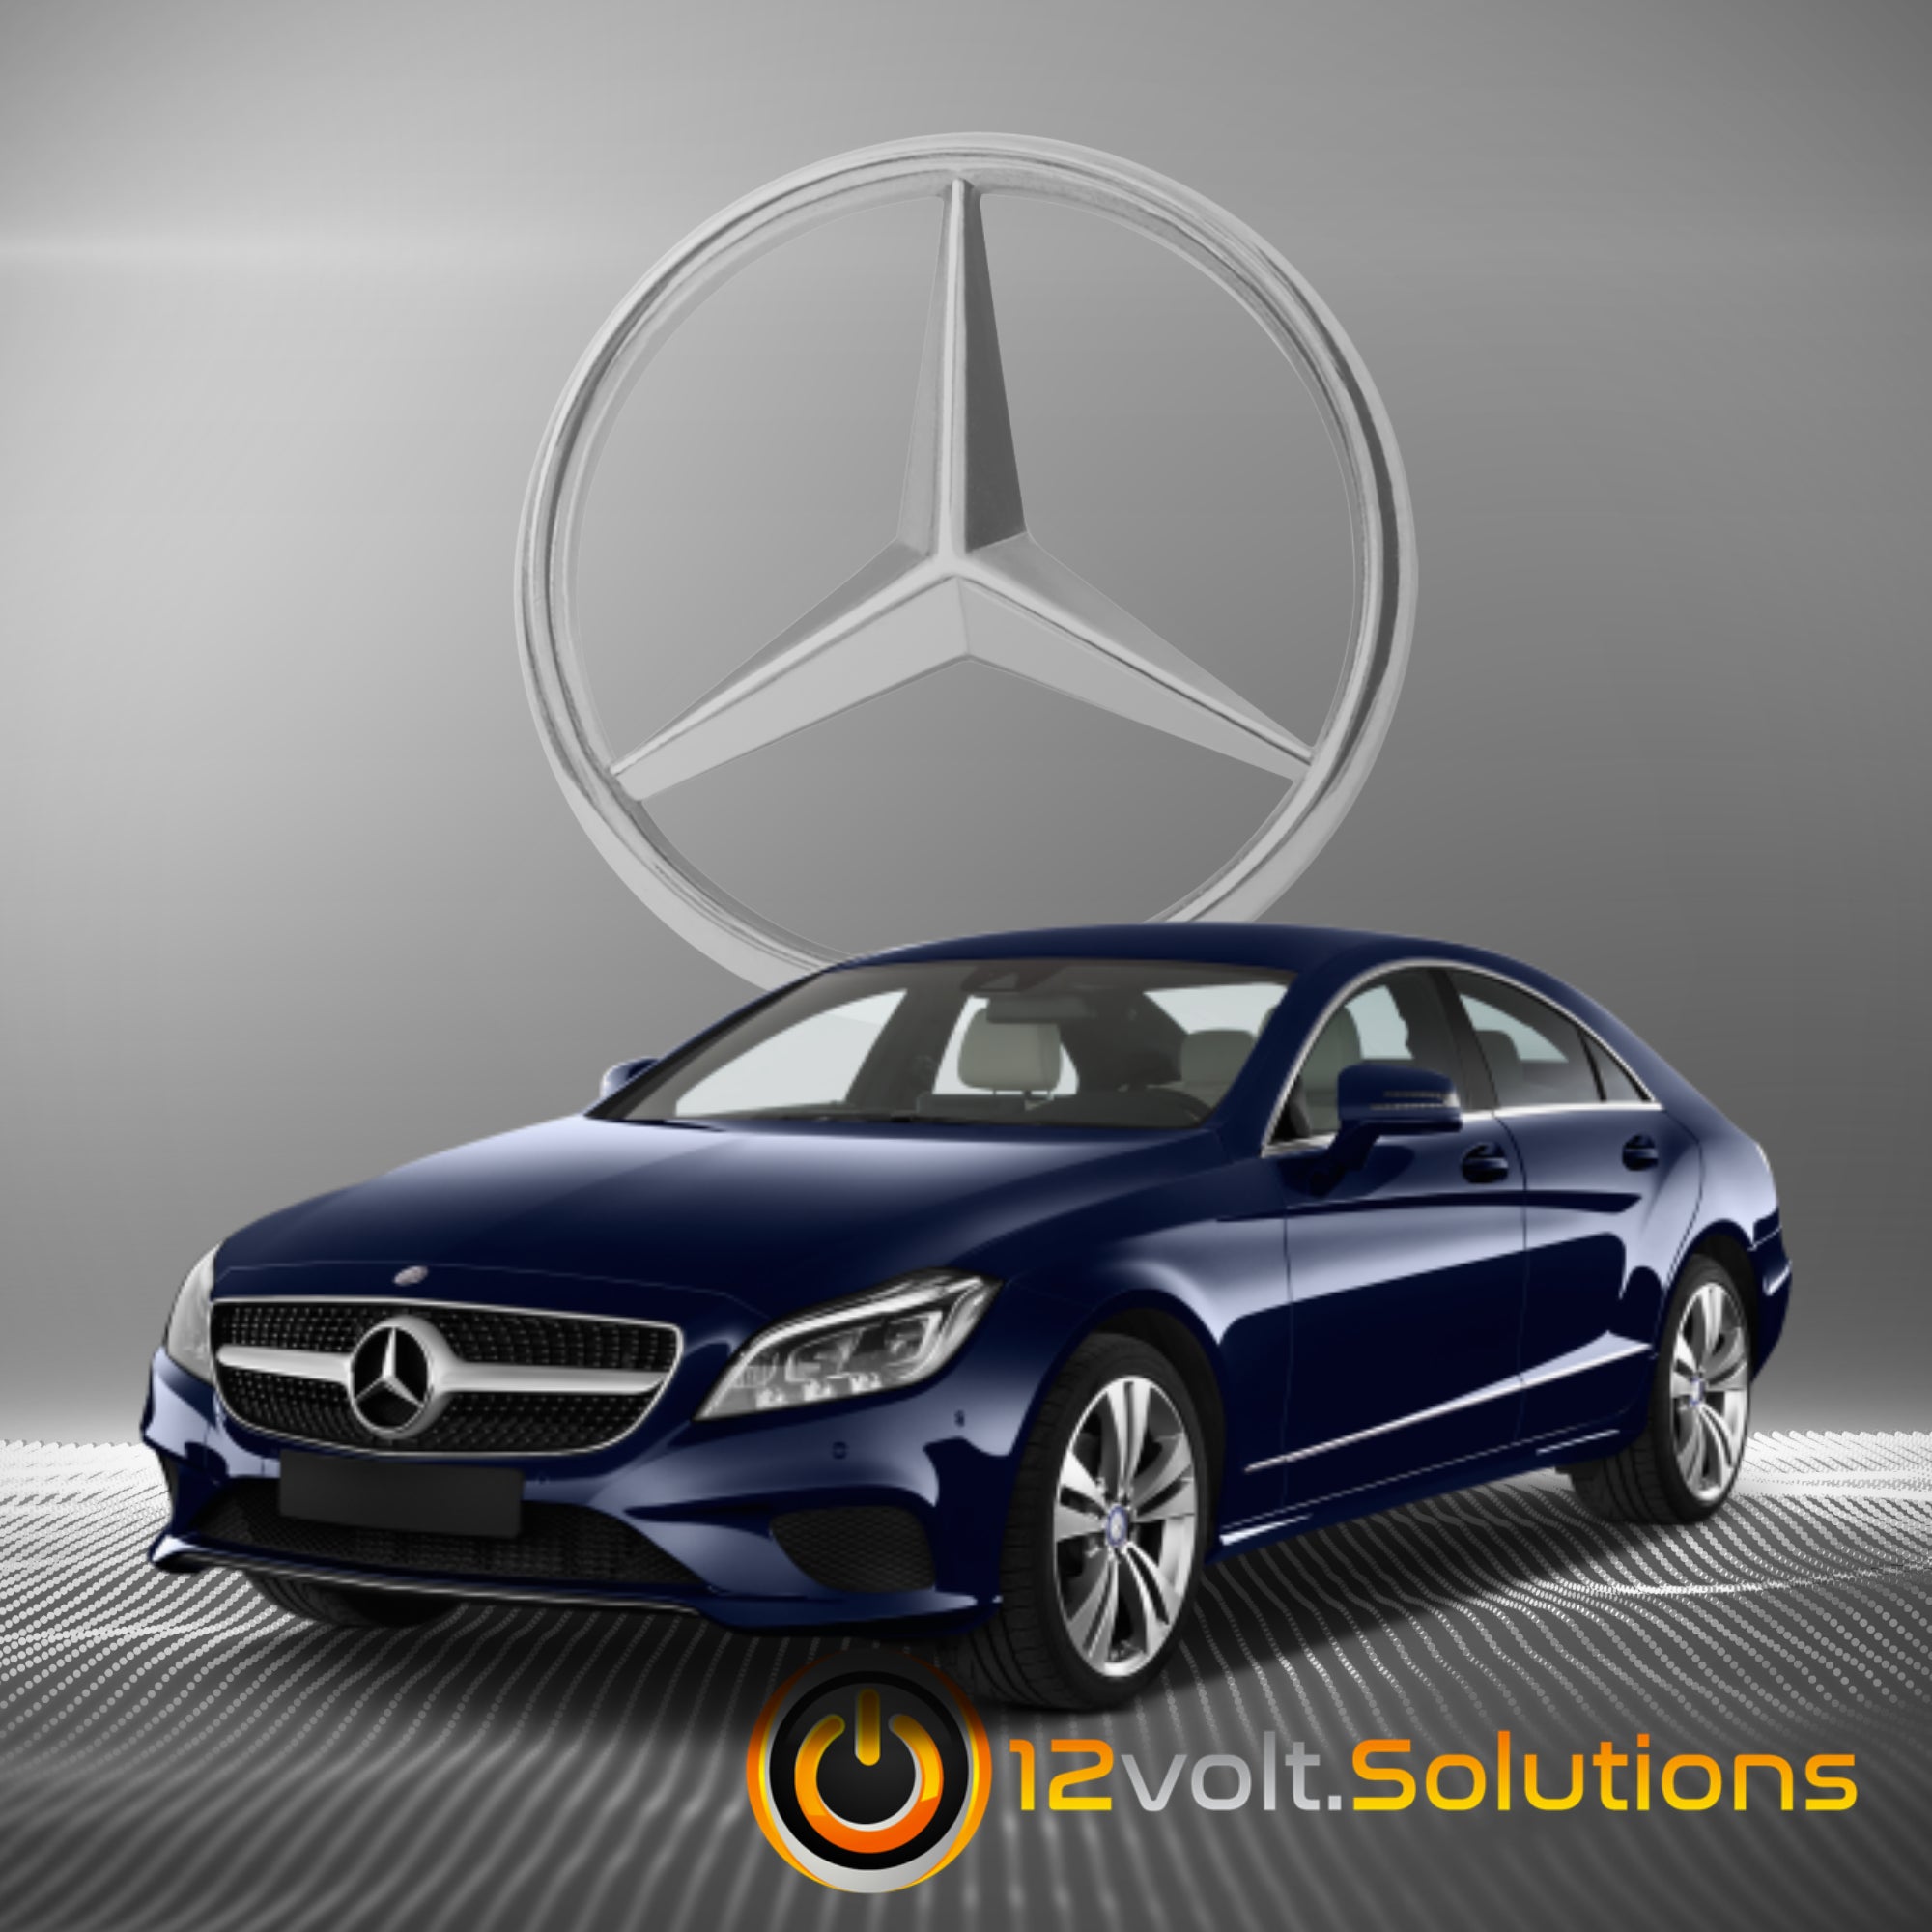 2012-2014 Mercedes Benz CLS-Class Plug & Play Remote Start Kit-12Volt.Solutions